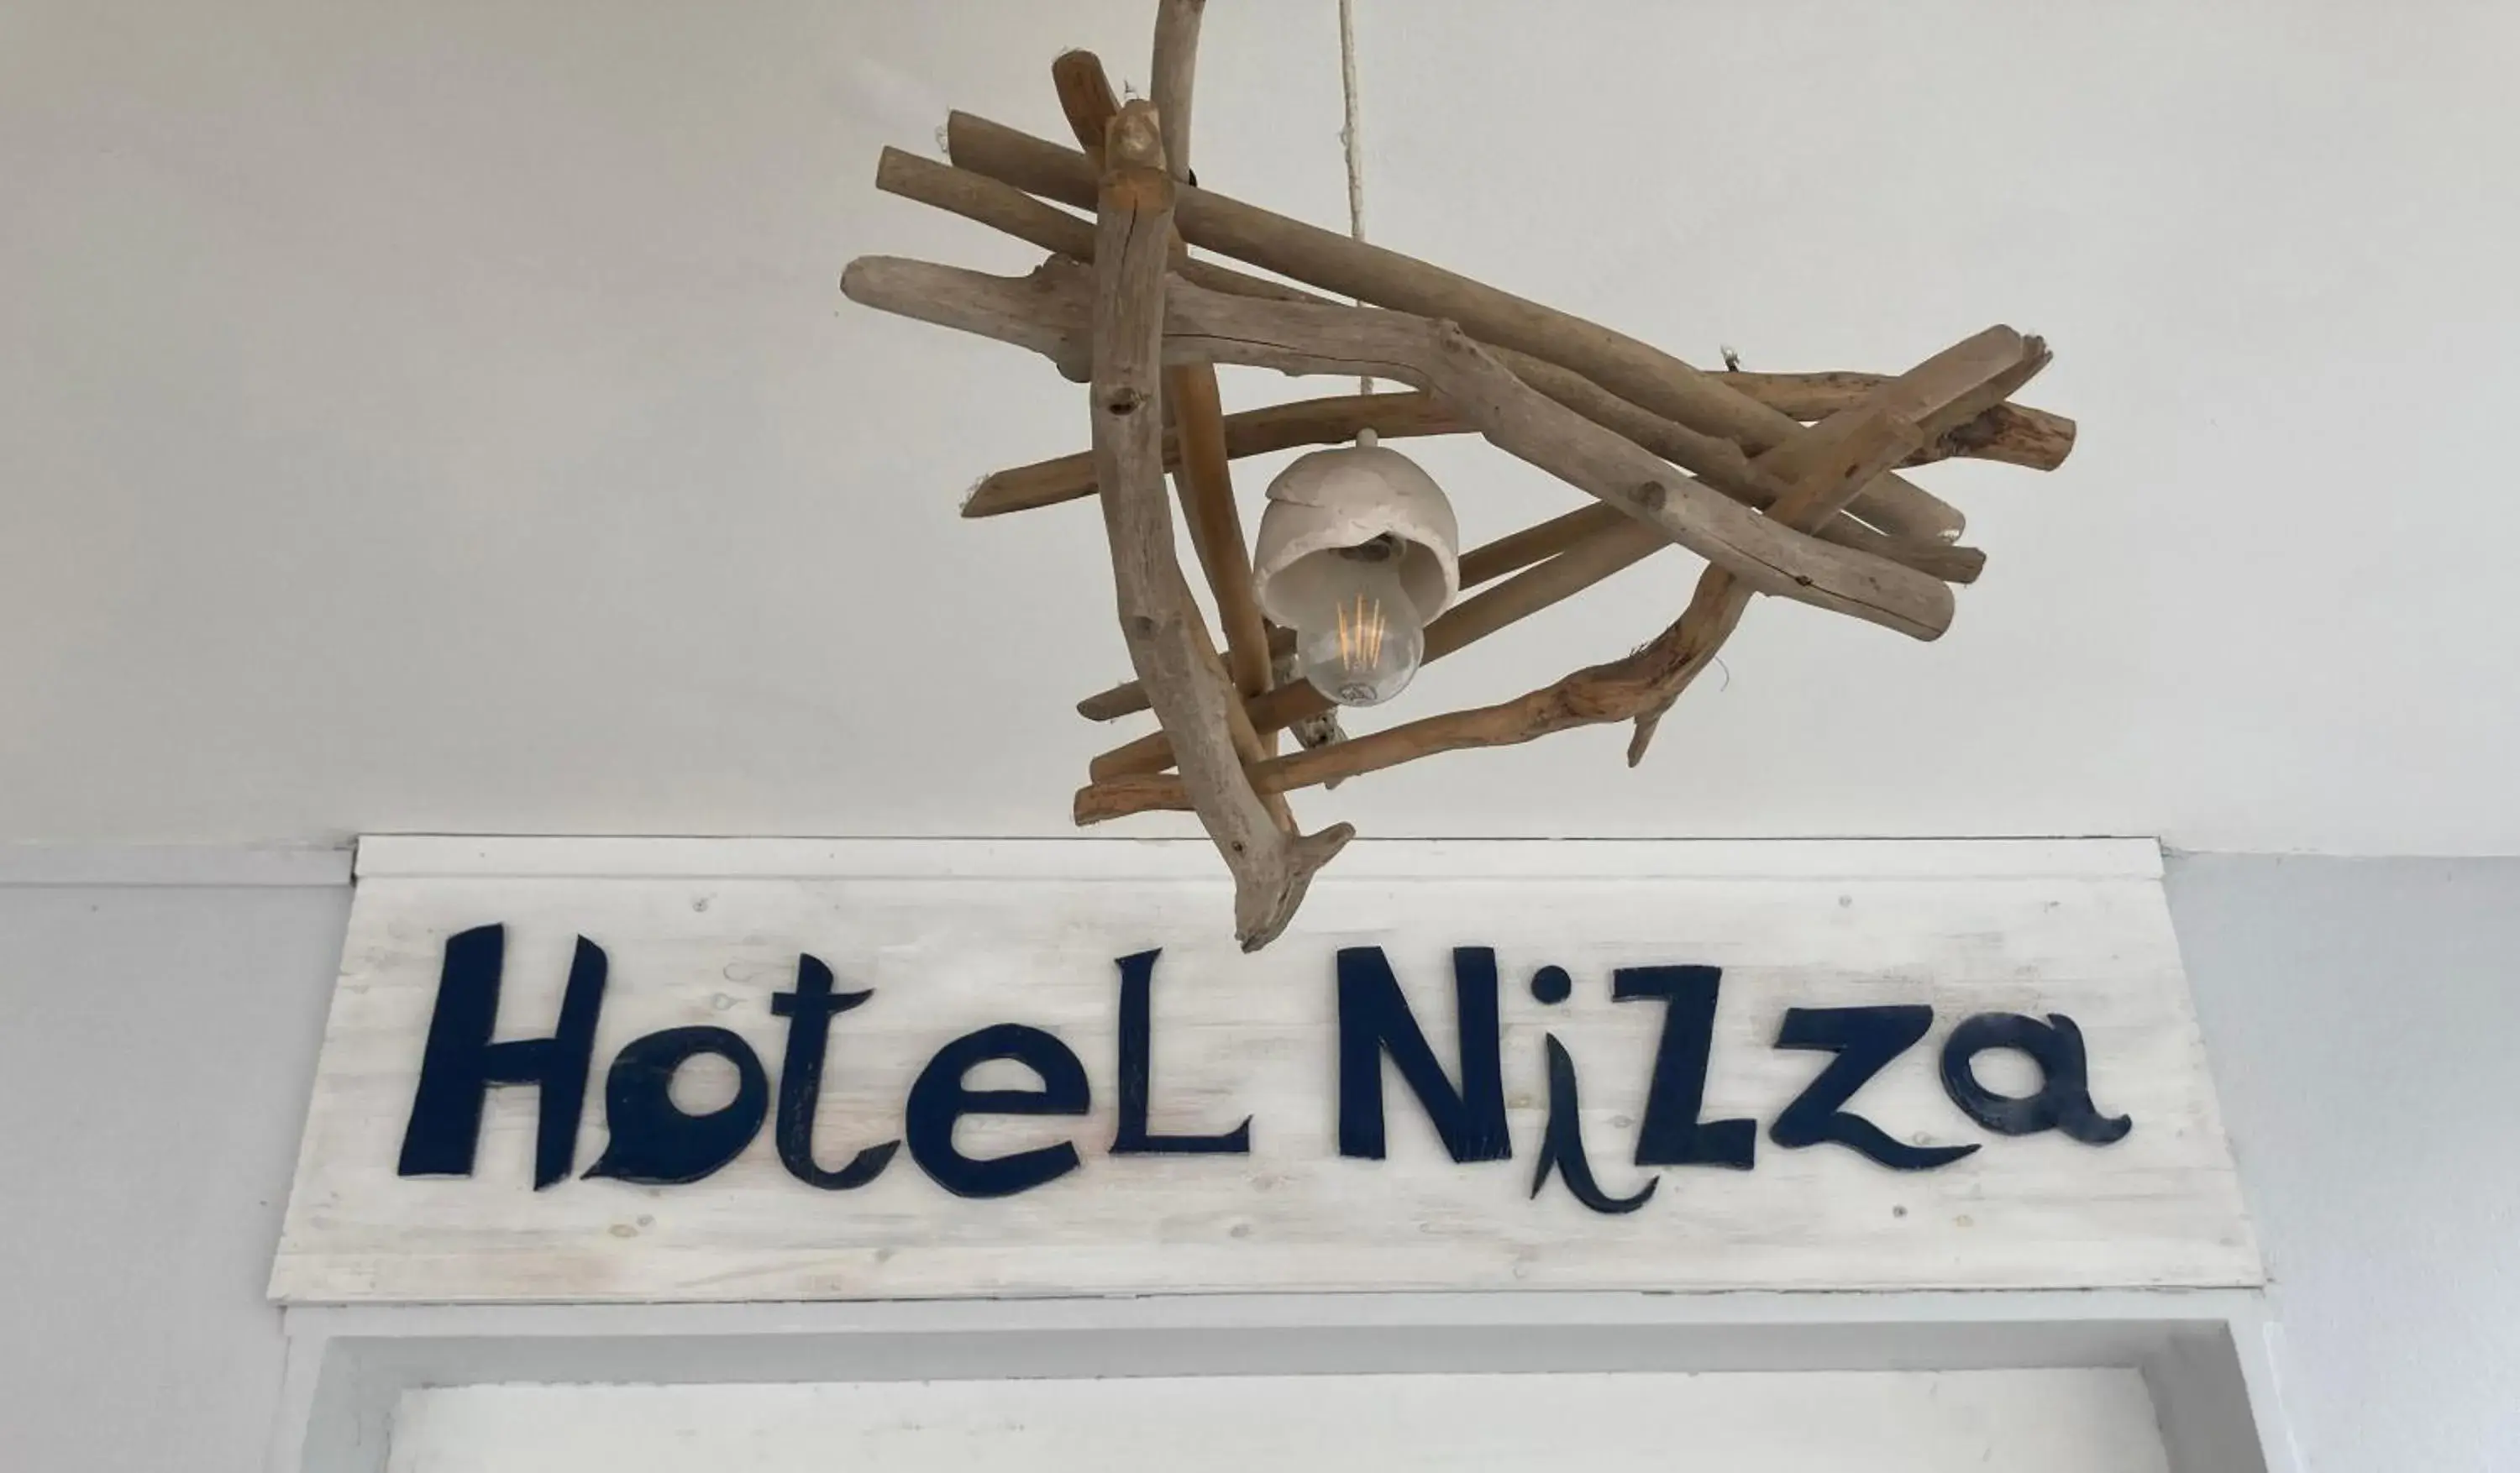 Property logo or sign in Hotel Nizza Creative Hotel